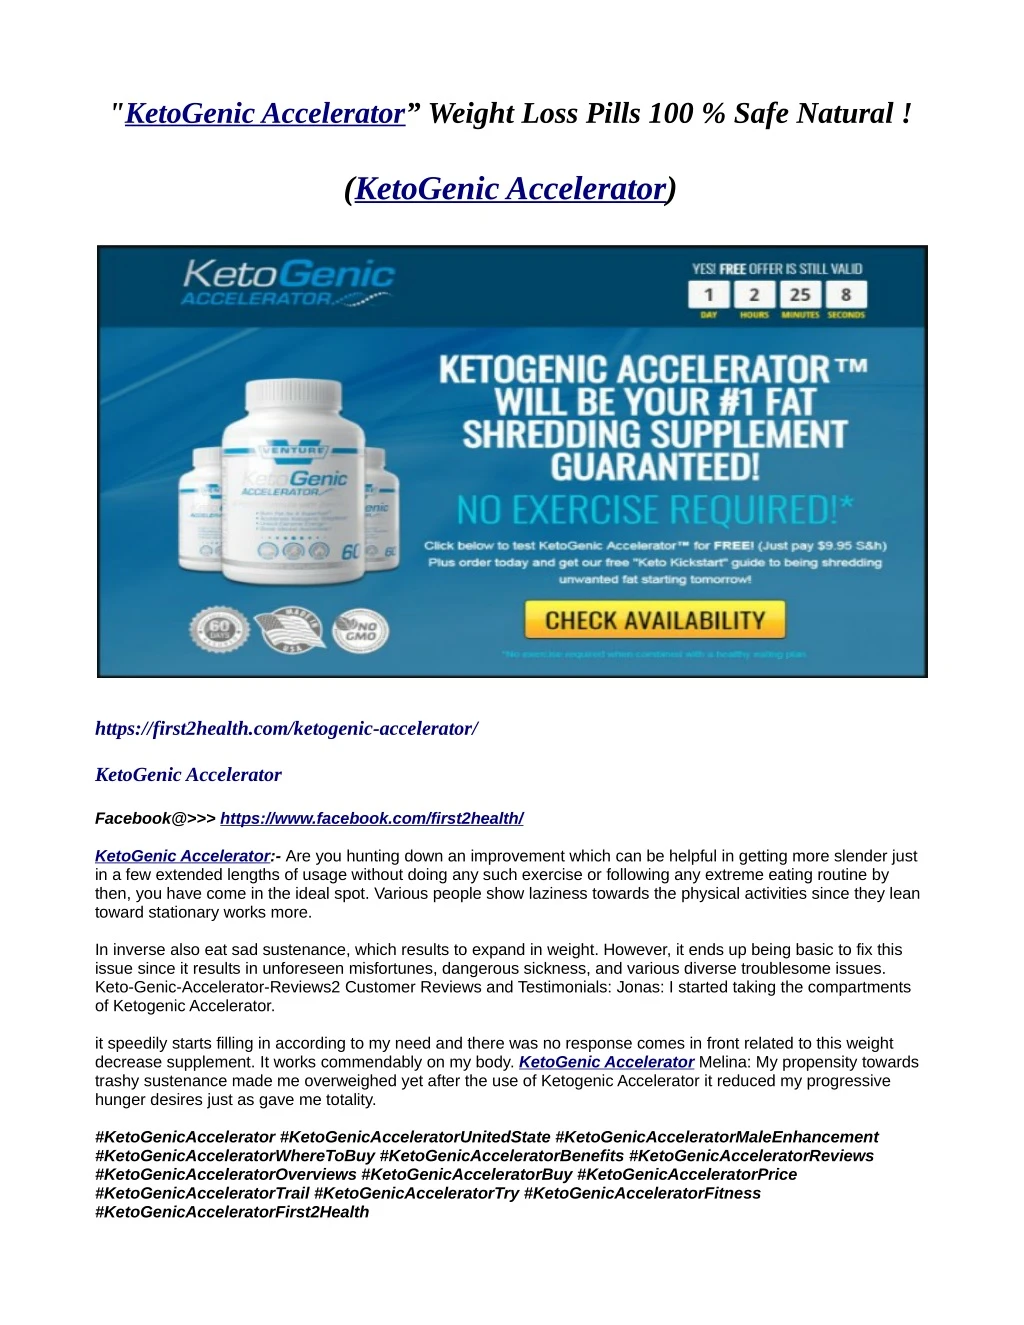 ketogenic accelerator weight loss pills 100 safe